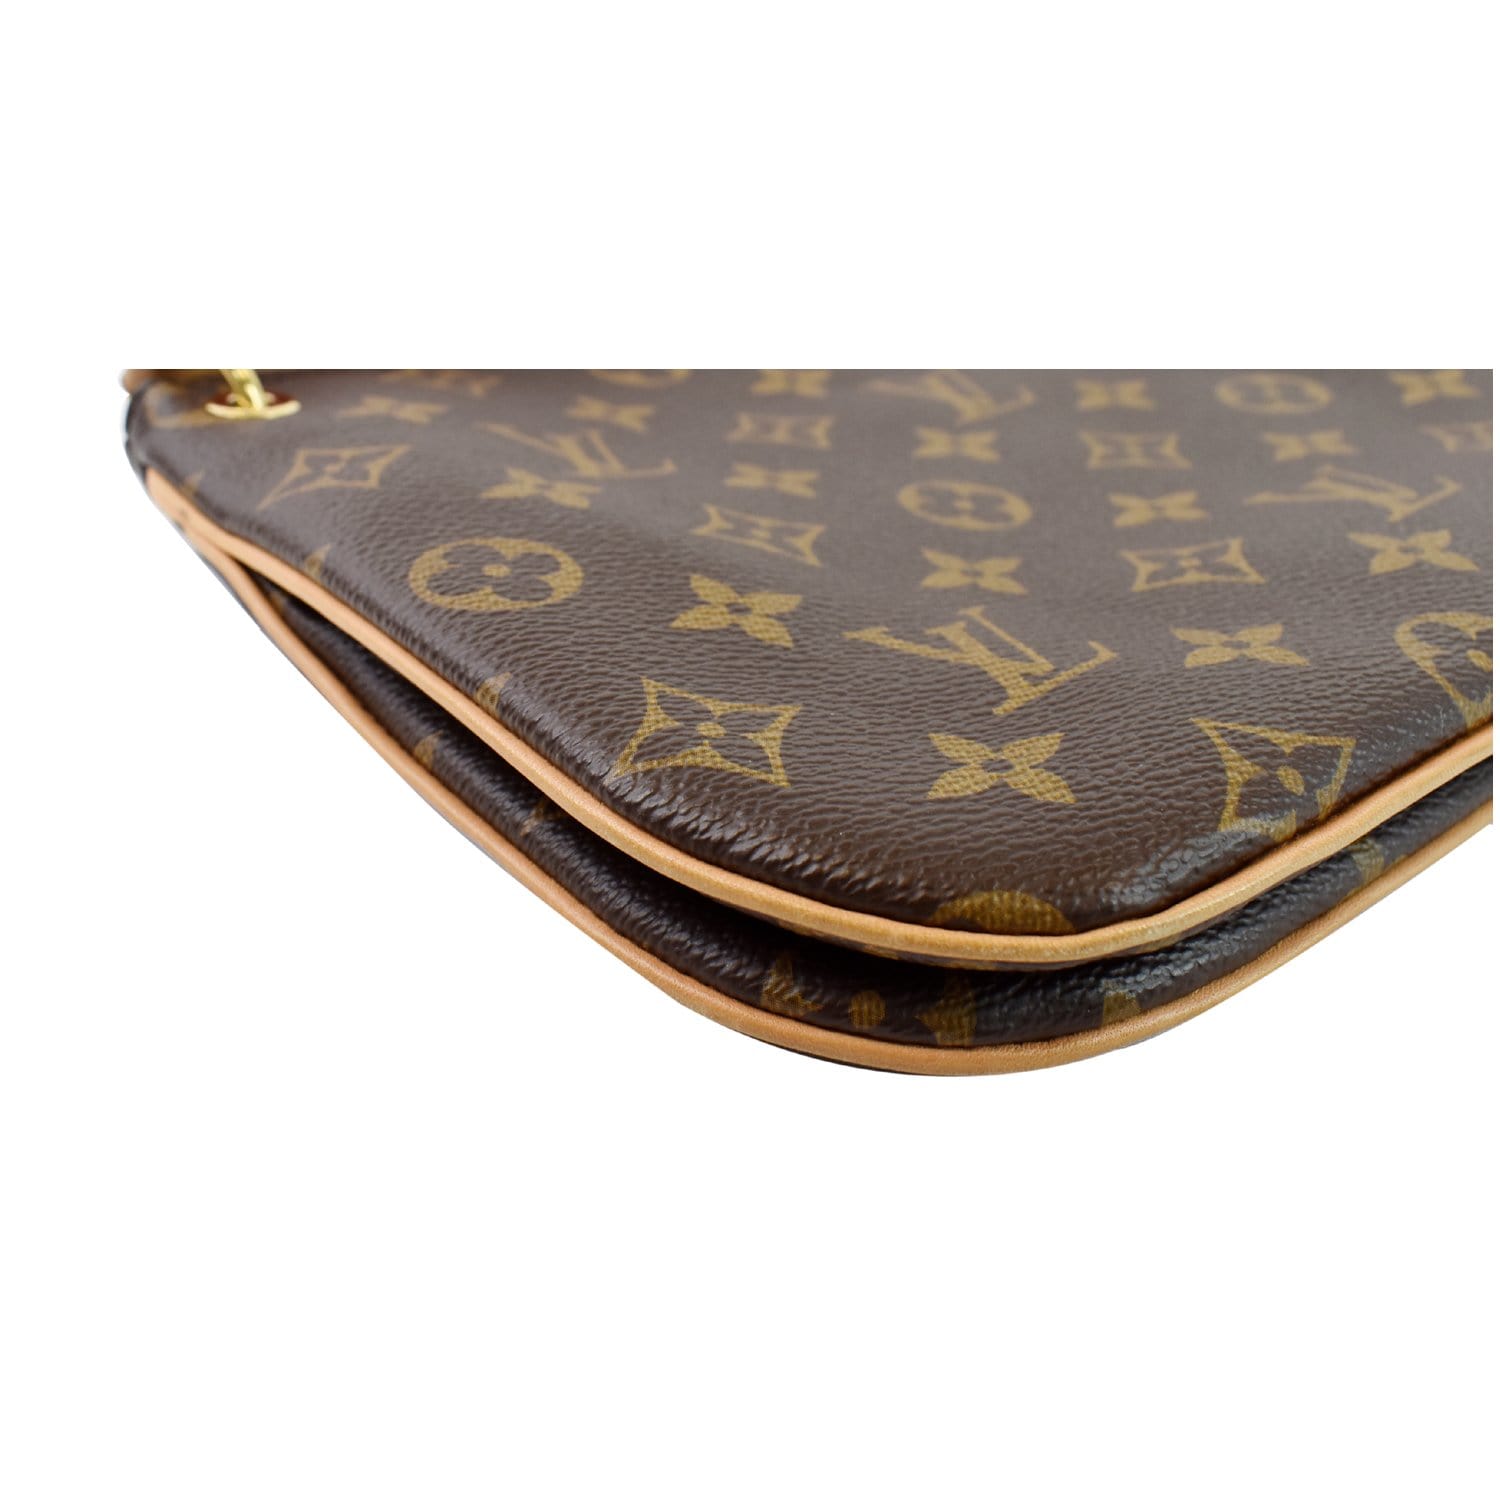 Louis Vuitton Lorette Handbag Monogram Canvas Brown 517981